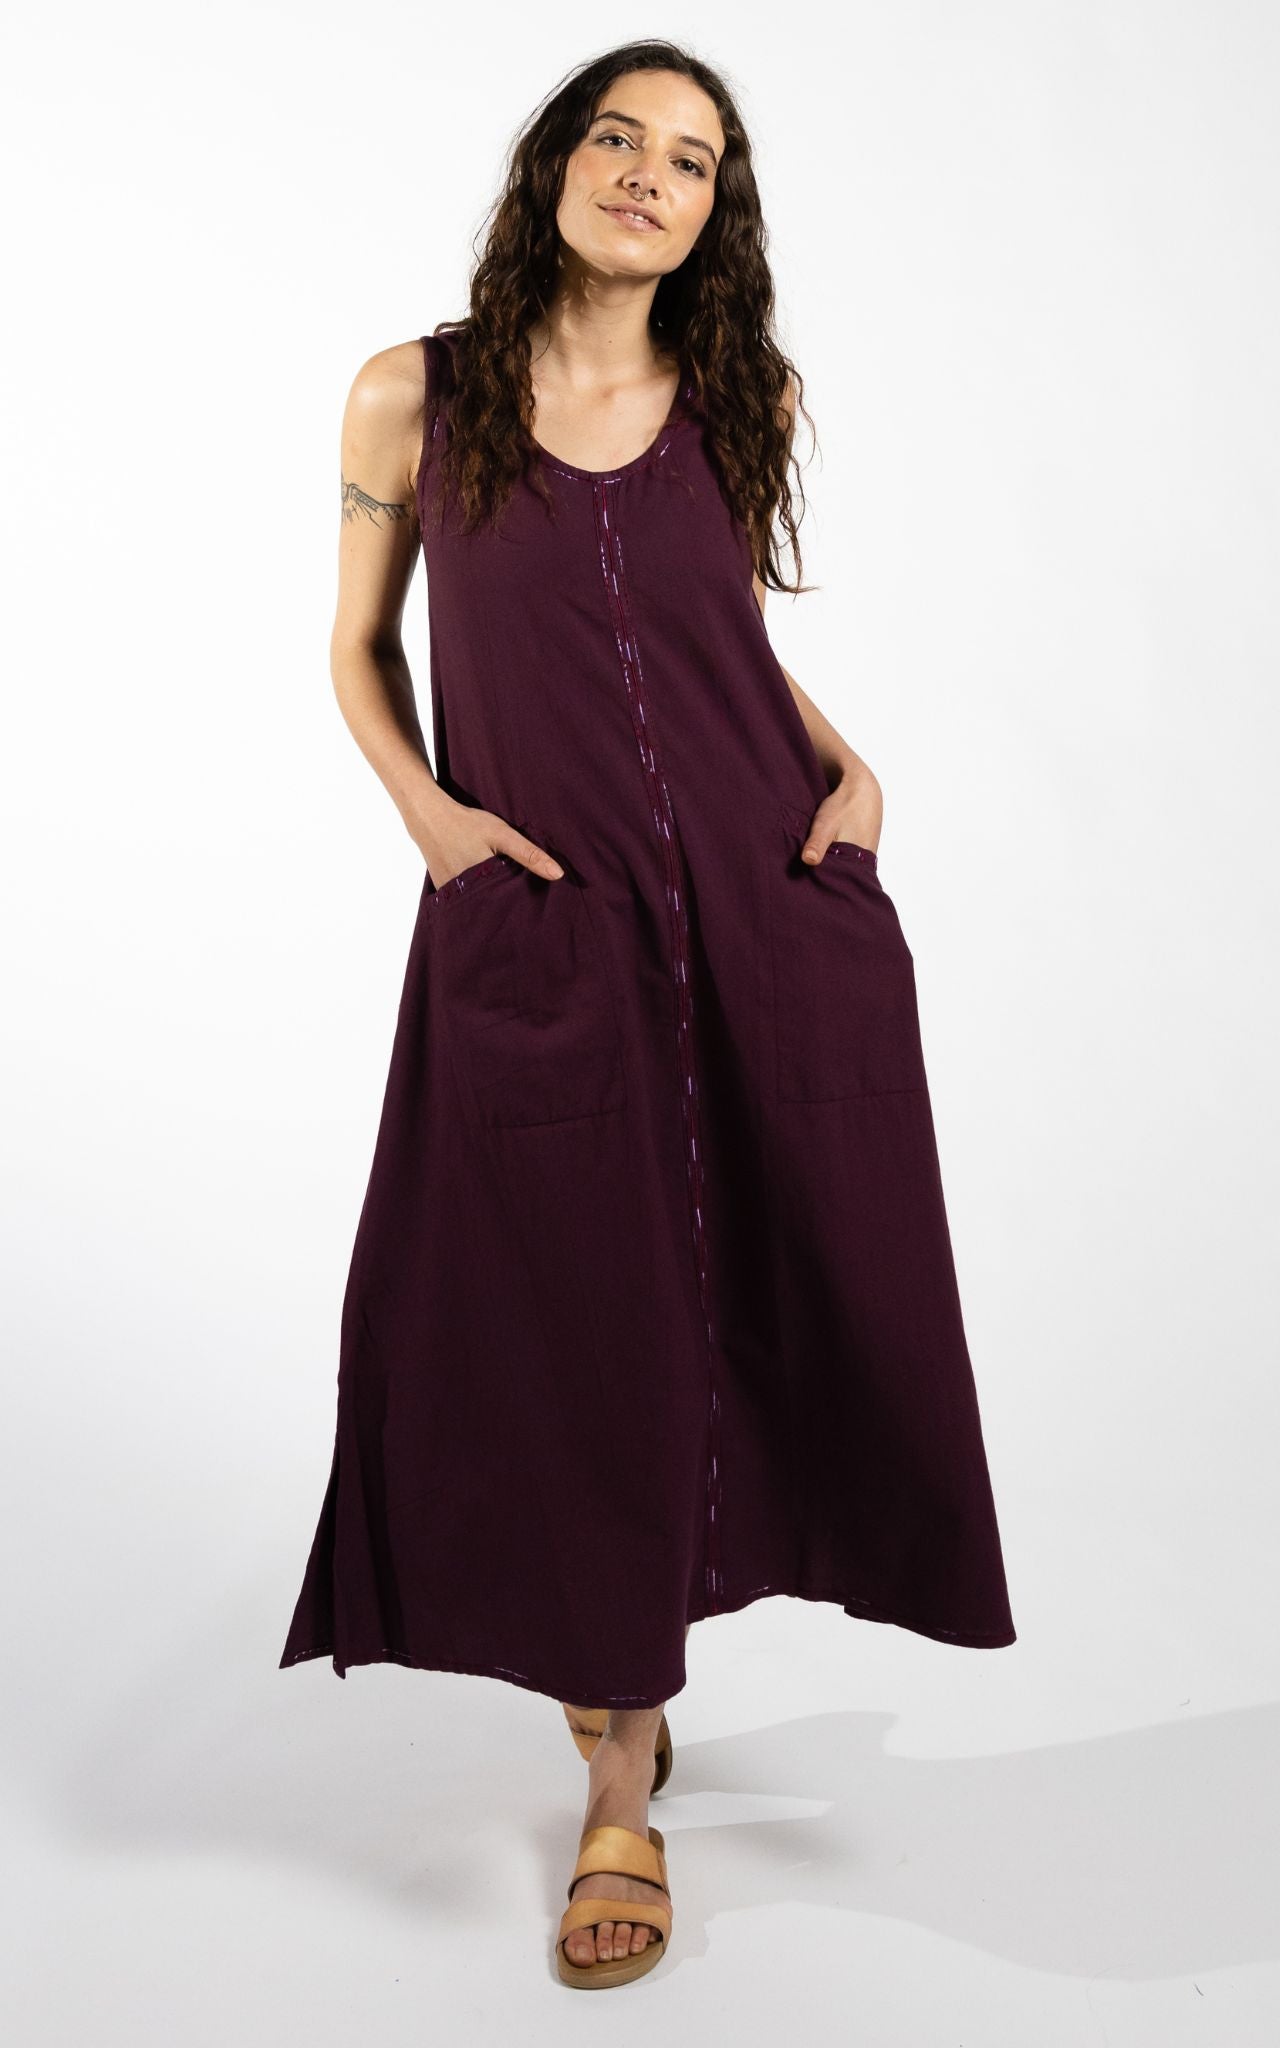 Surya Australia Ethical Cotton 'Calliope' Dress made in Nepal - Wine